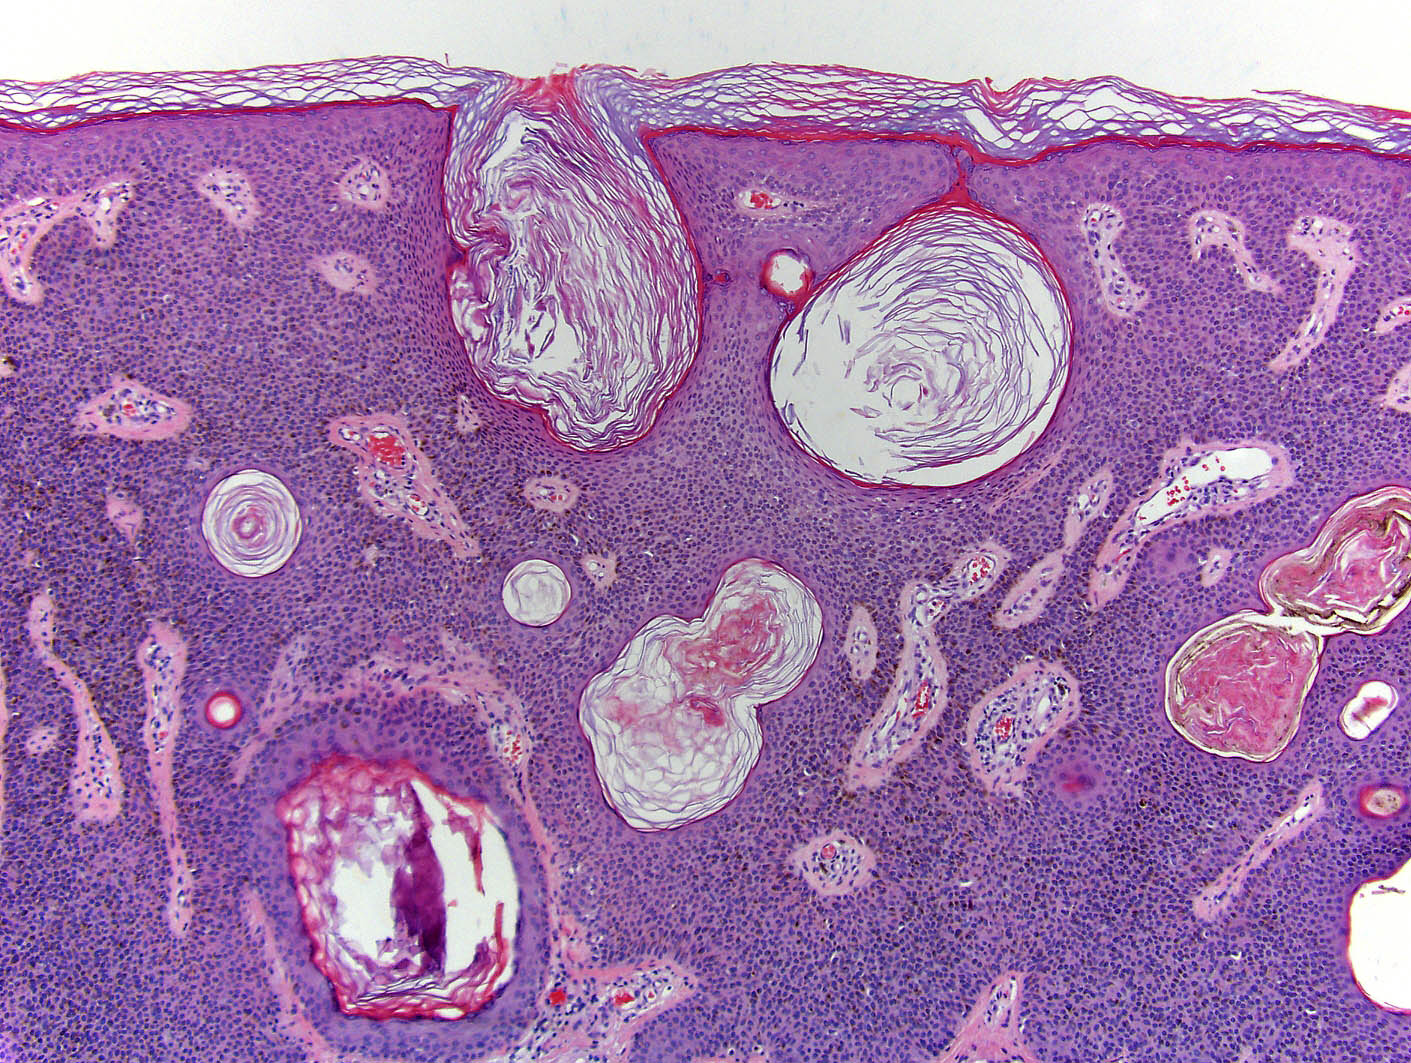 squamous papilloma vs seborrheic keratosis